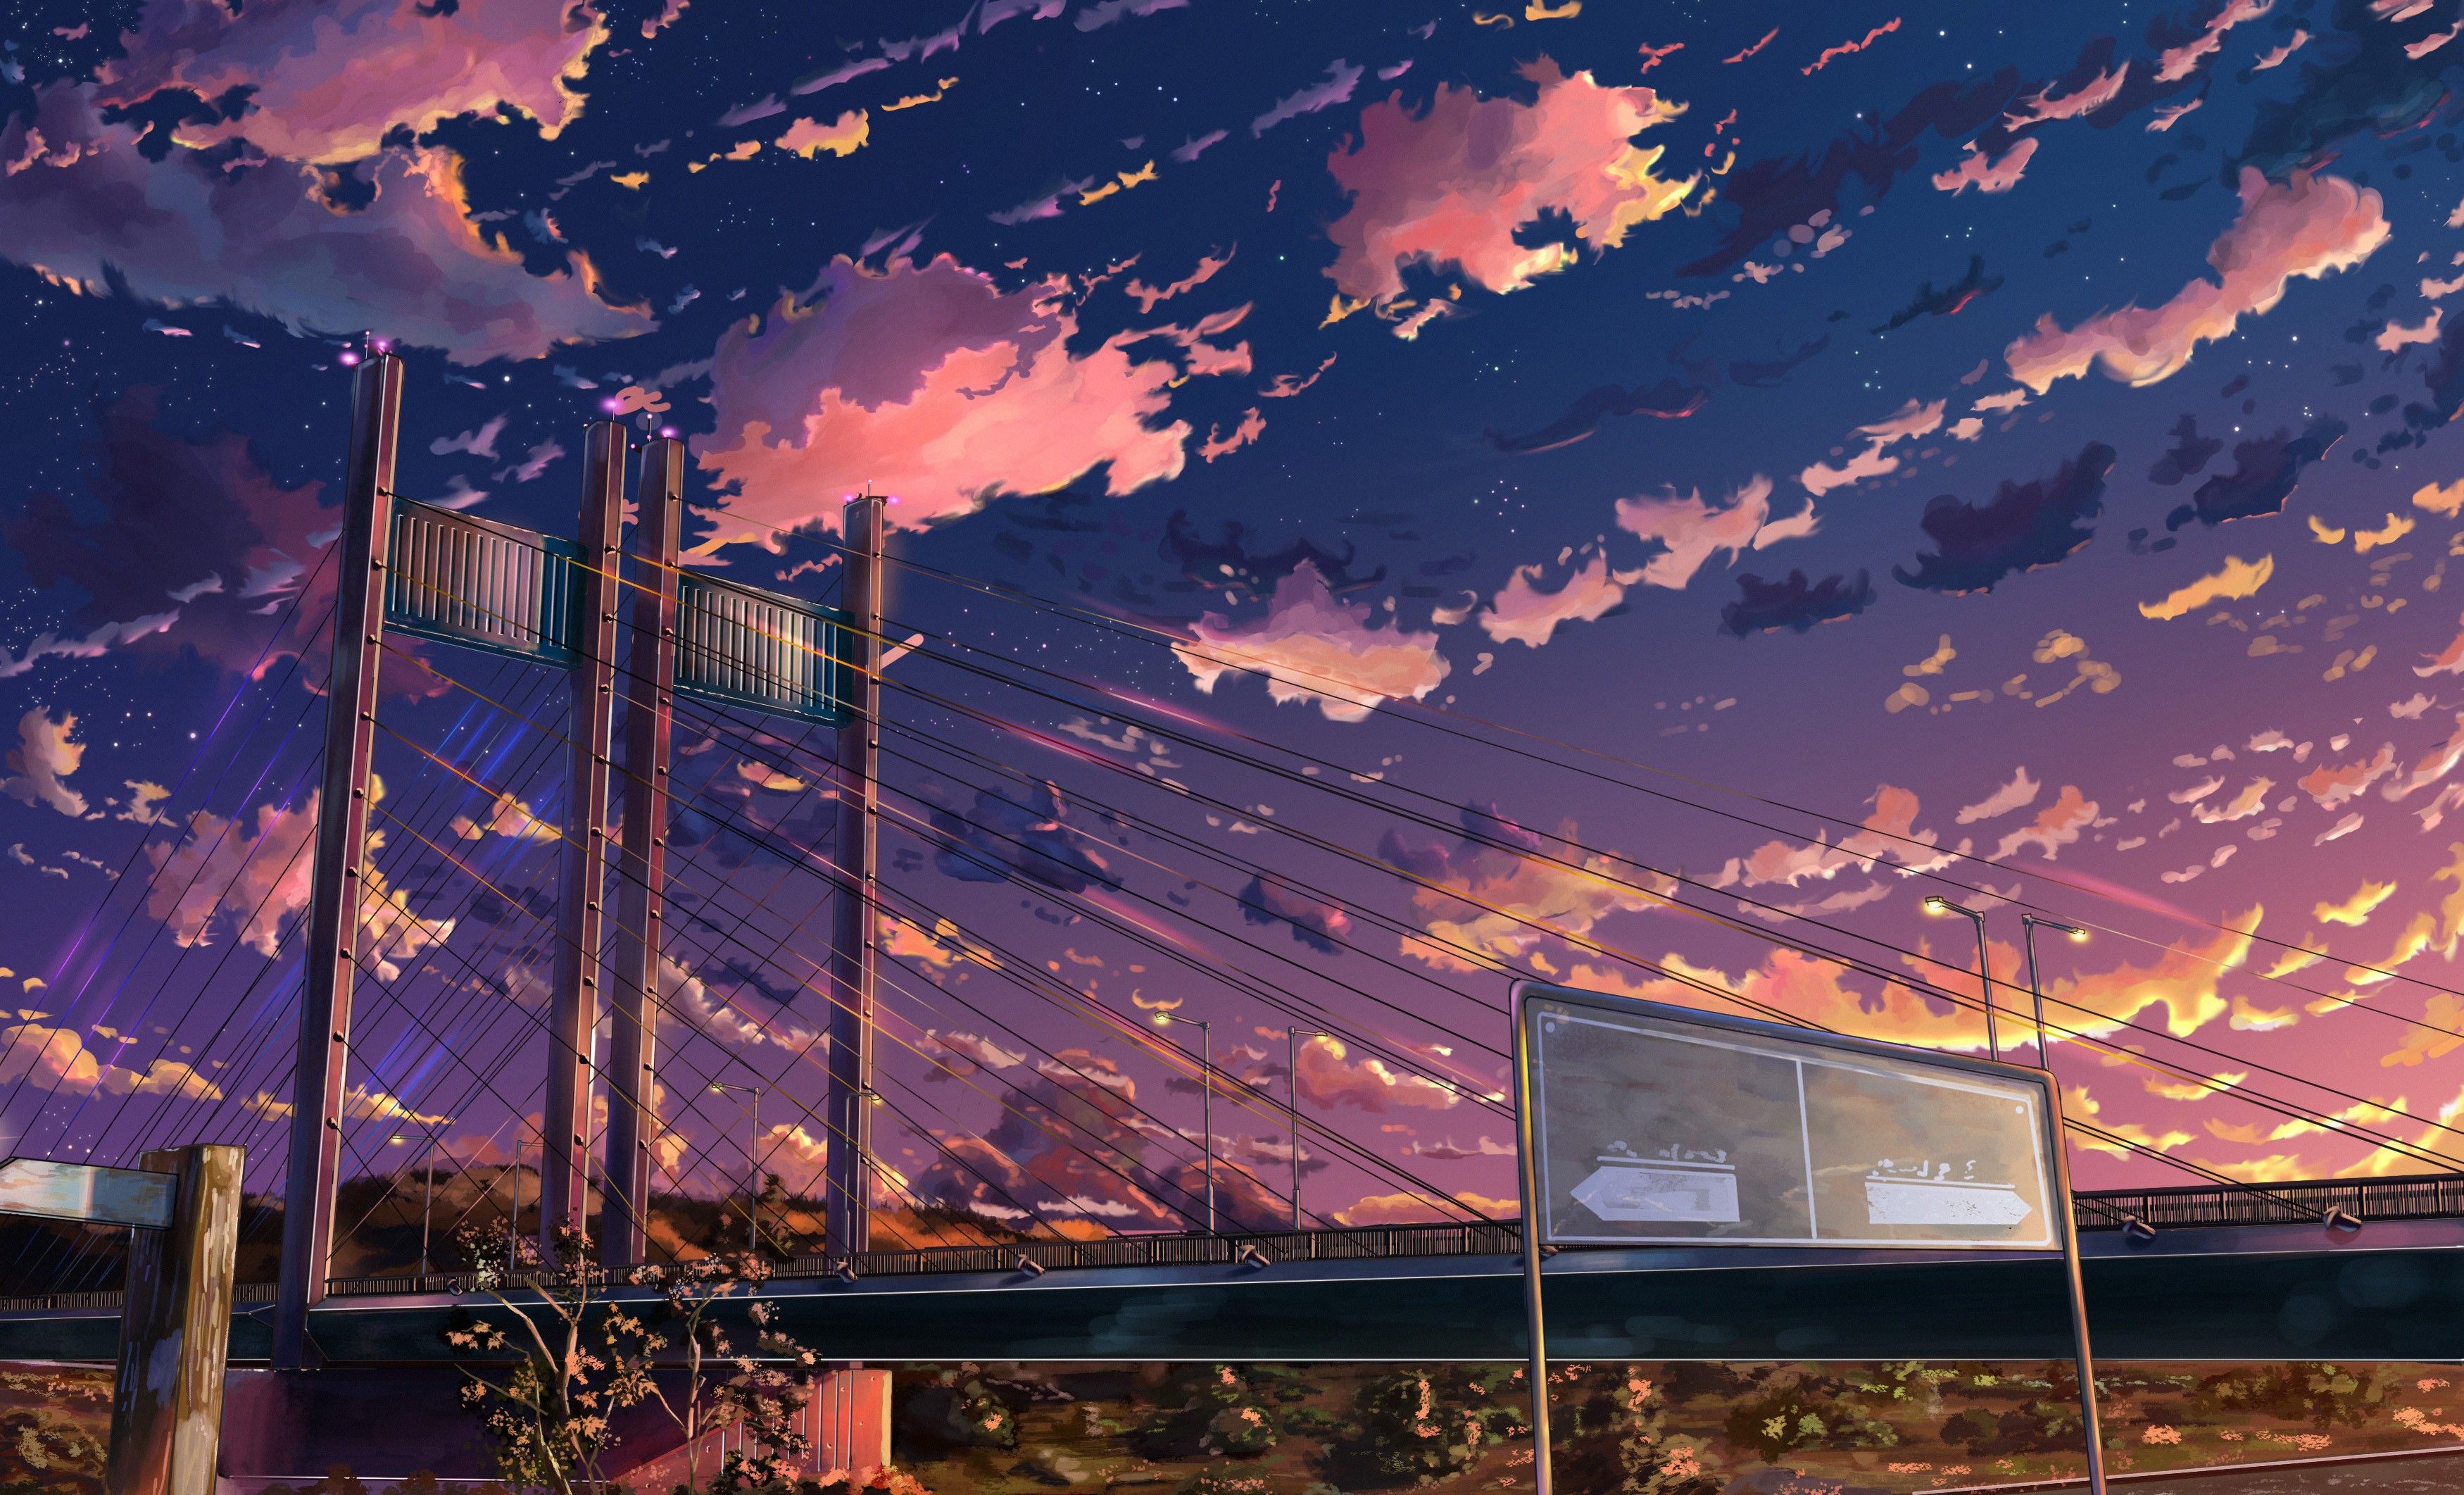 1920x1080 anime scenery wallpaper 1920x1080 download - Sunset, anime landscape